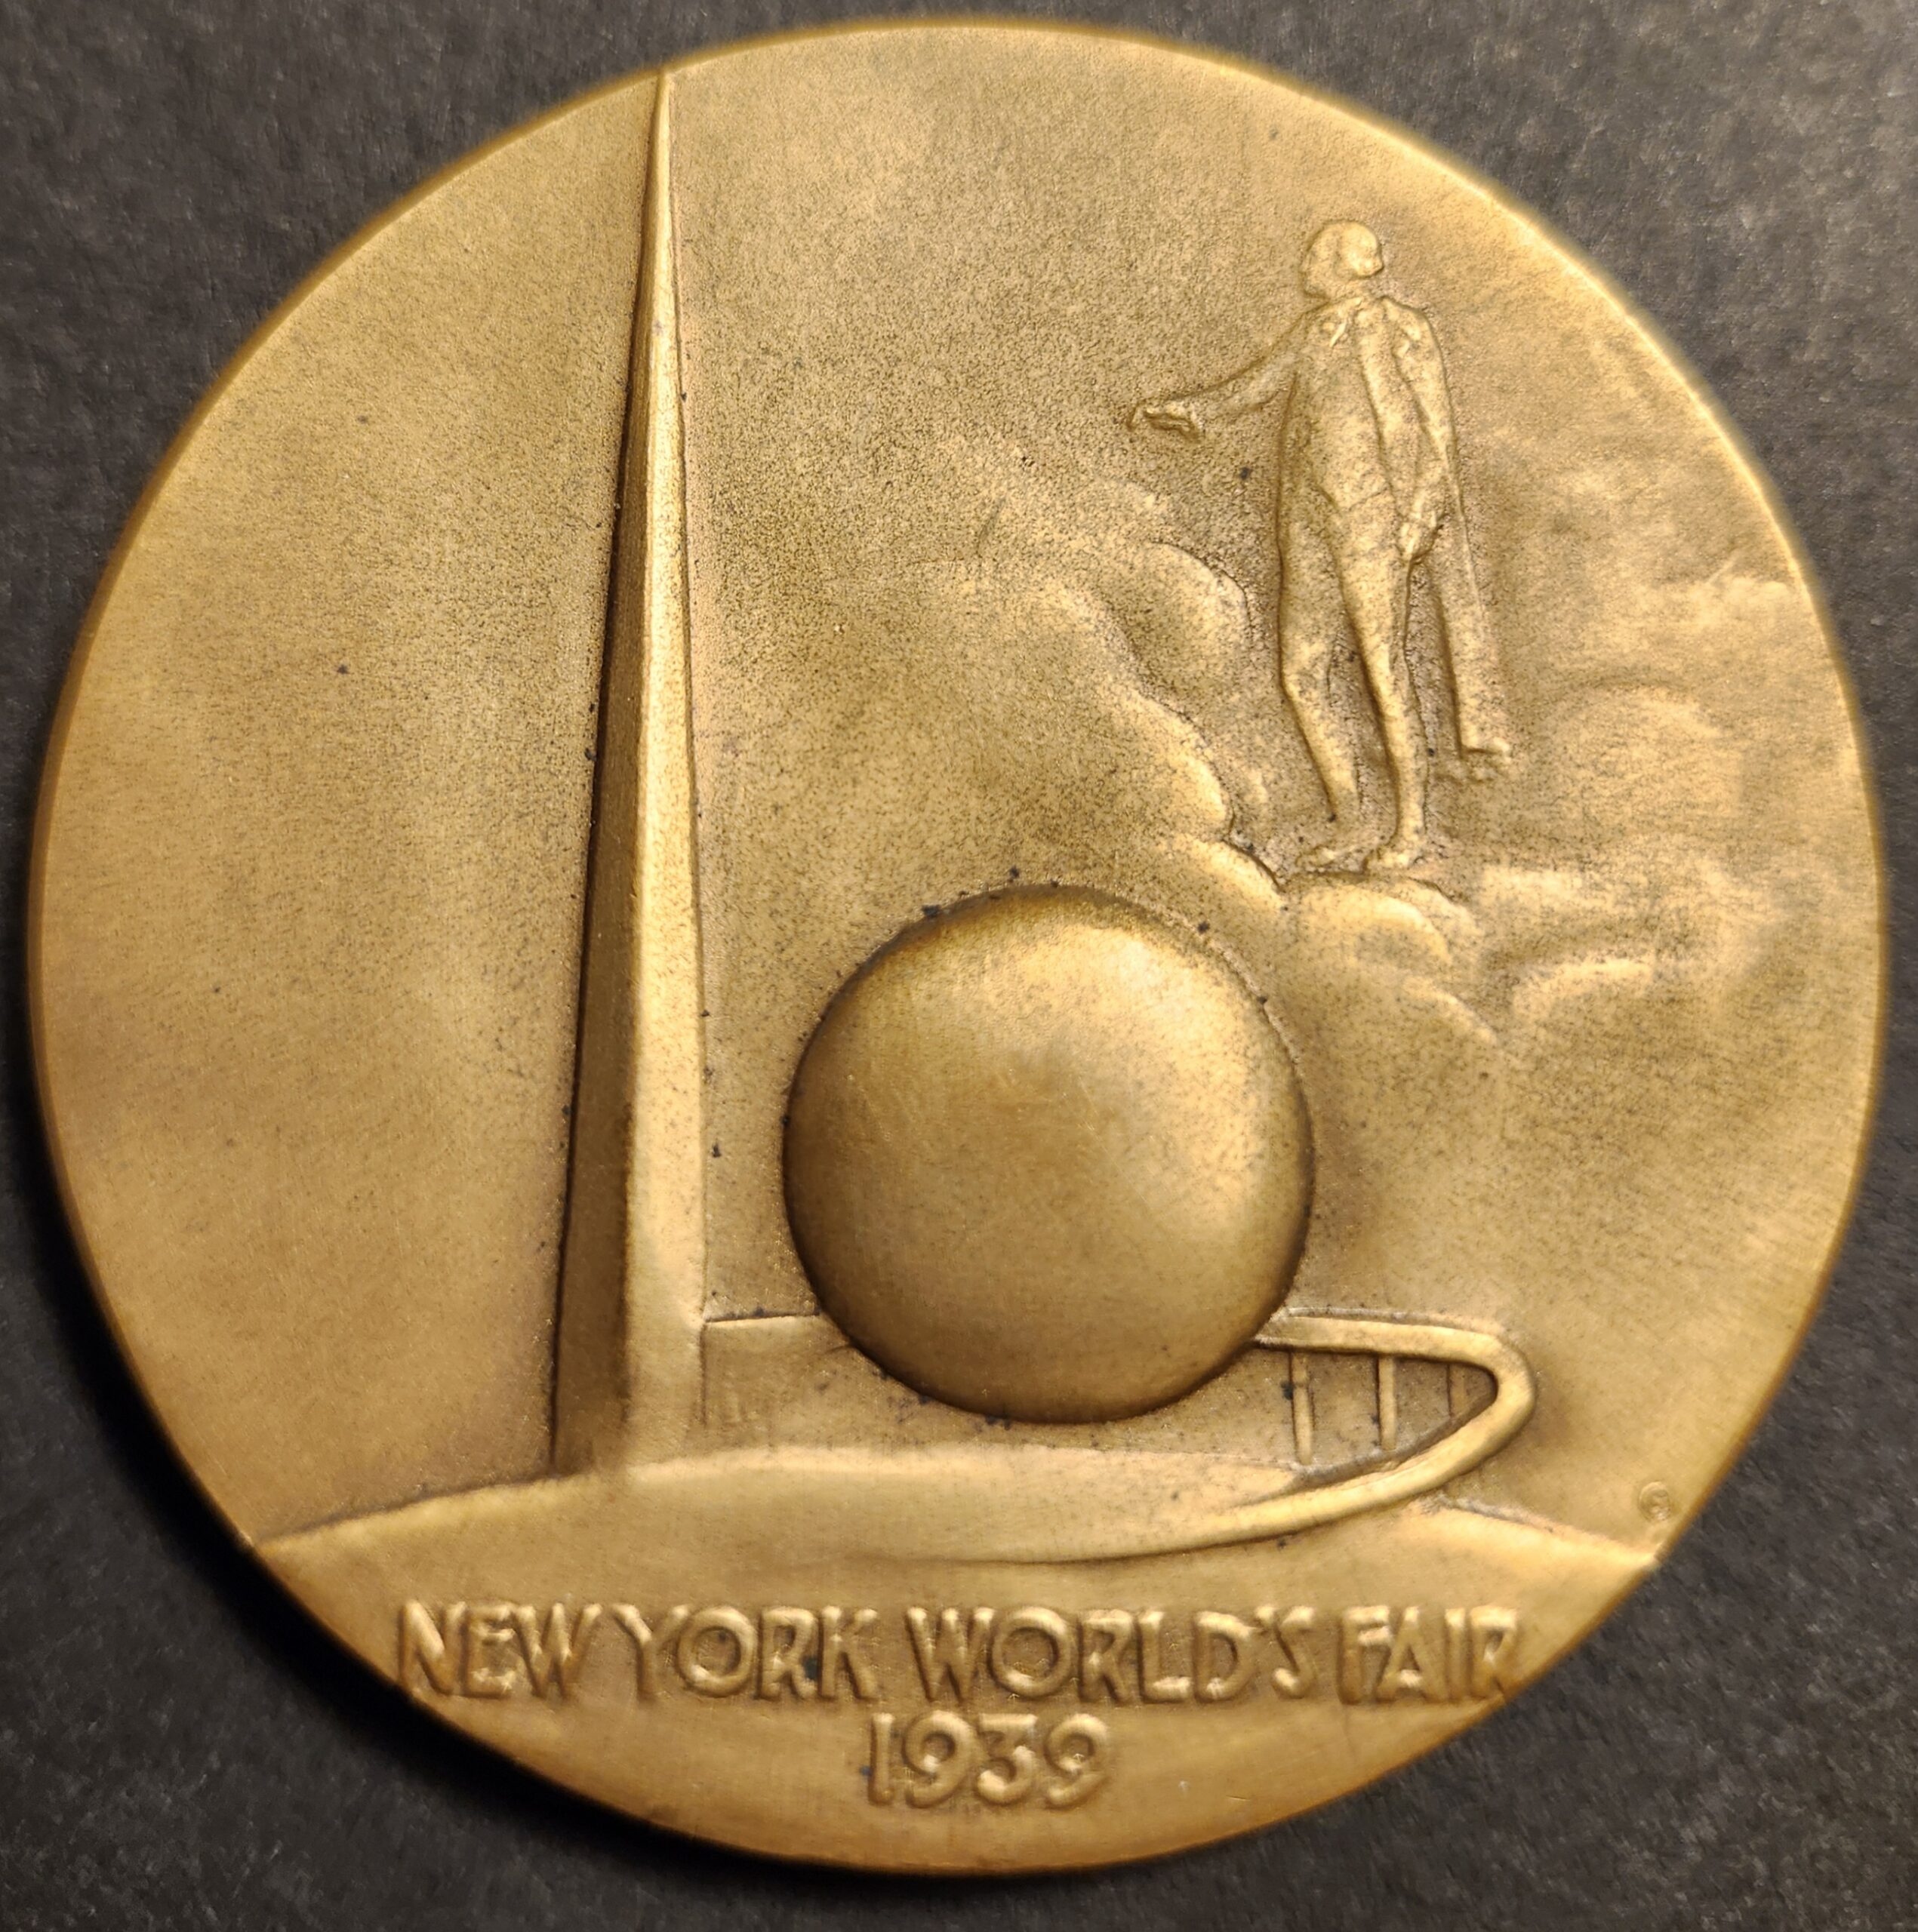 official medal 1939 New York World's Fair